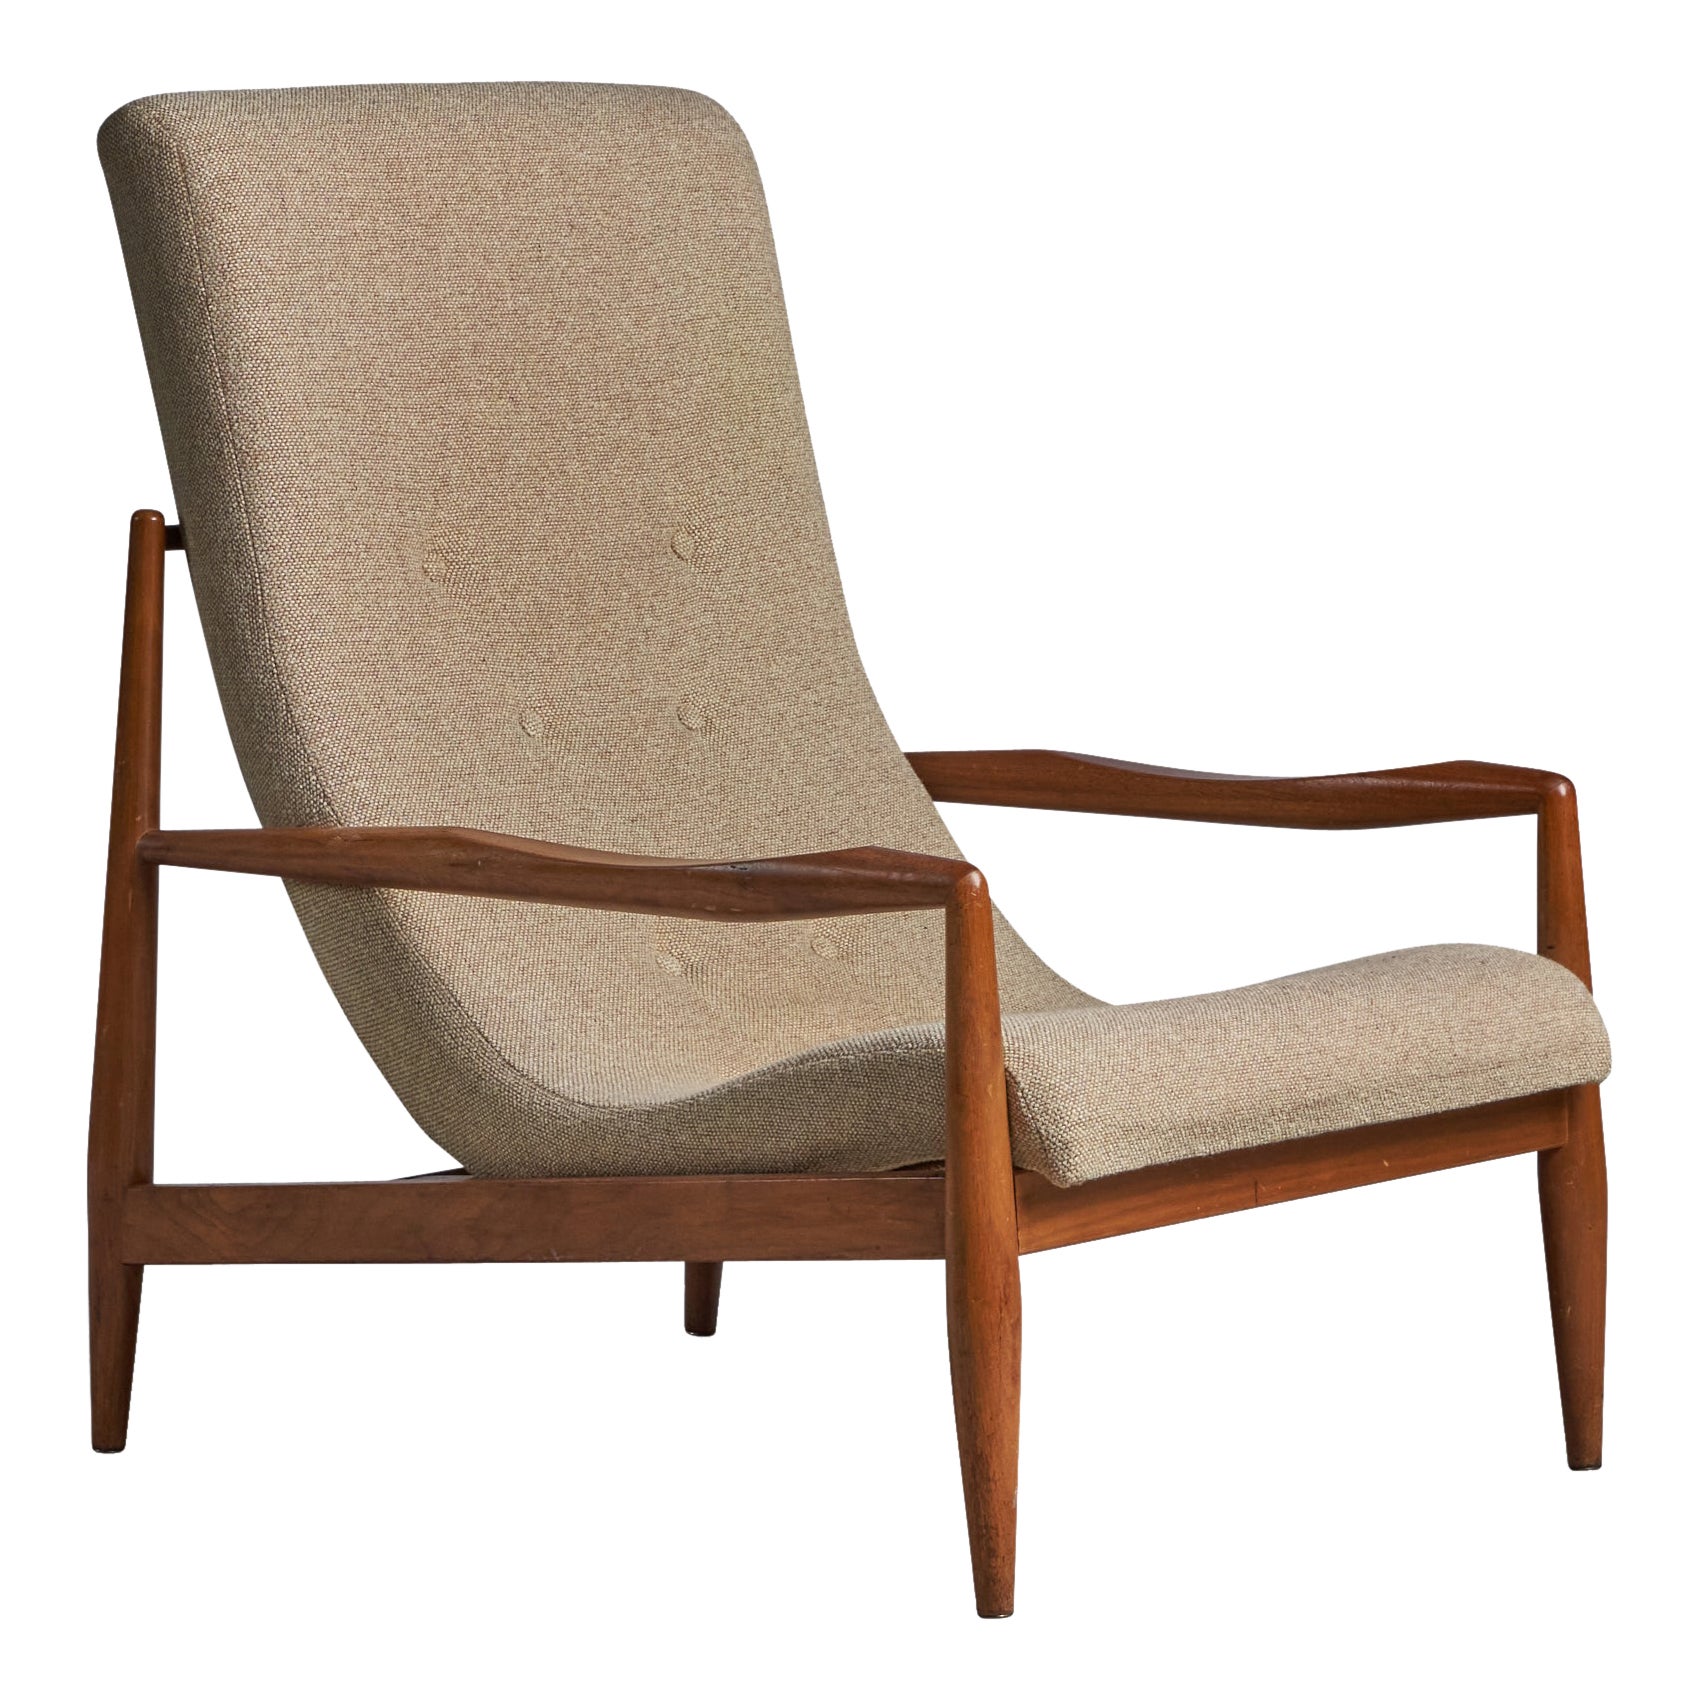 Adrian Pearsall, Lounge Chair, Walnut, Fabric, USA, 1950s